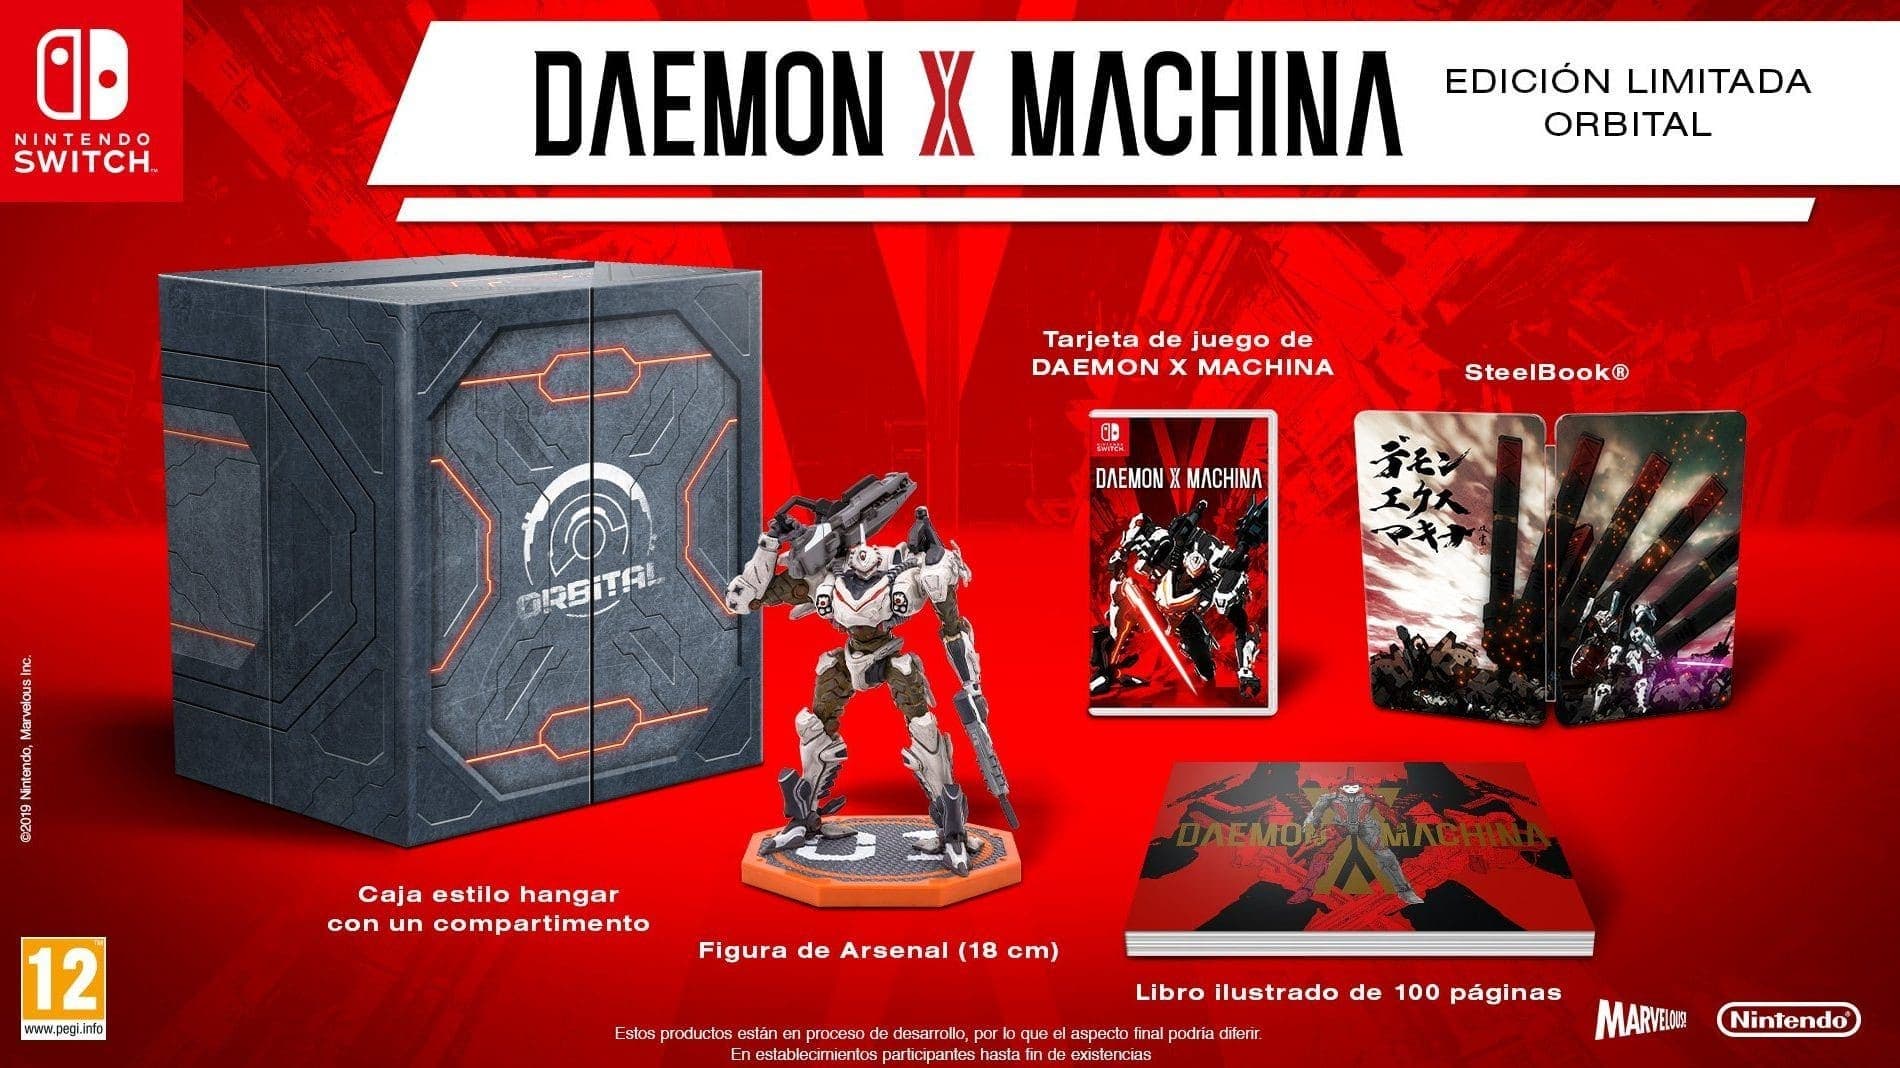 Primer unboxing de la edición limitada Orbital de Daemon X Machina